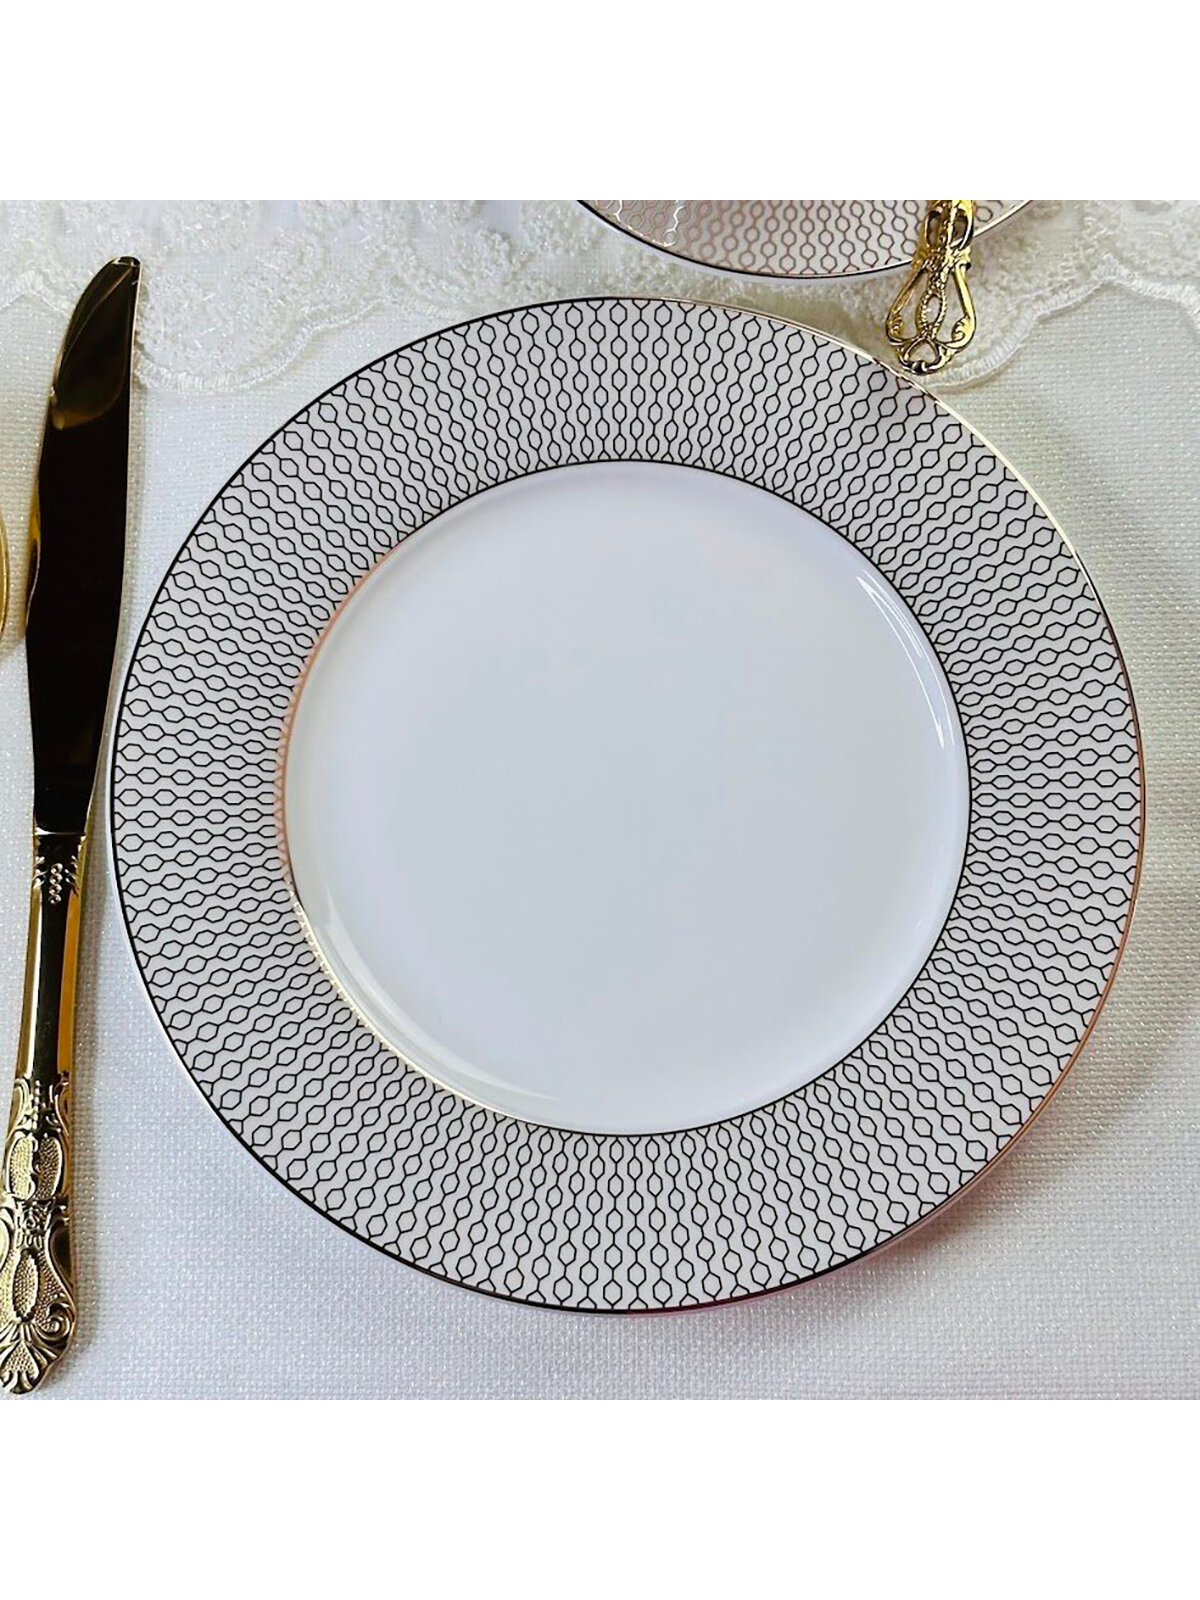 Набор тарелок на 6 персон Lenardi Севилья, из костяного фарфора, 16,5 см